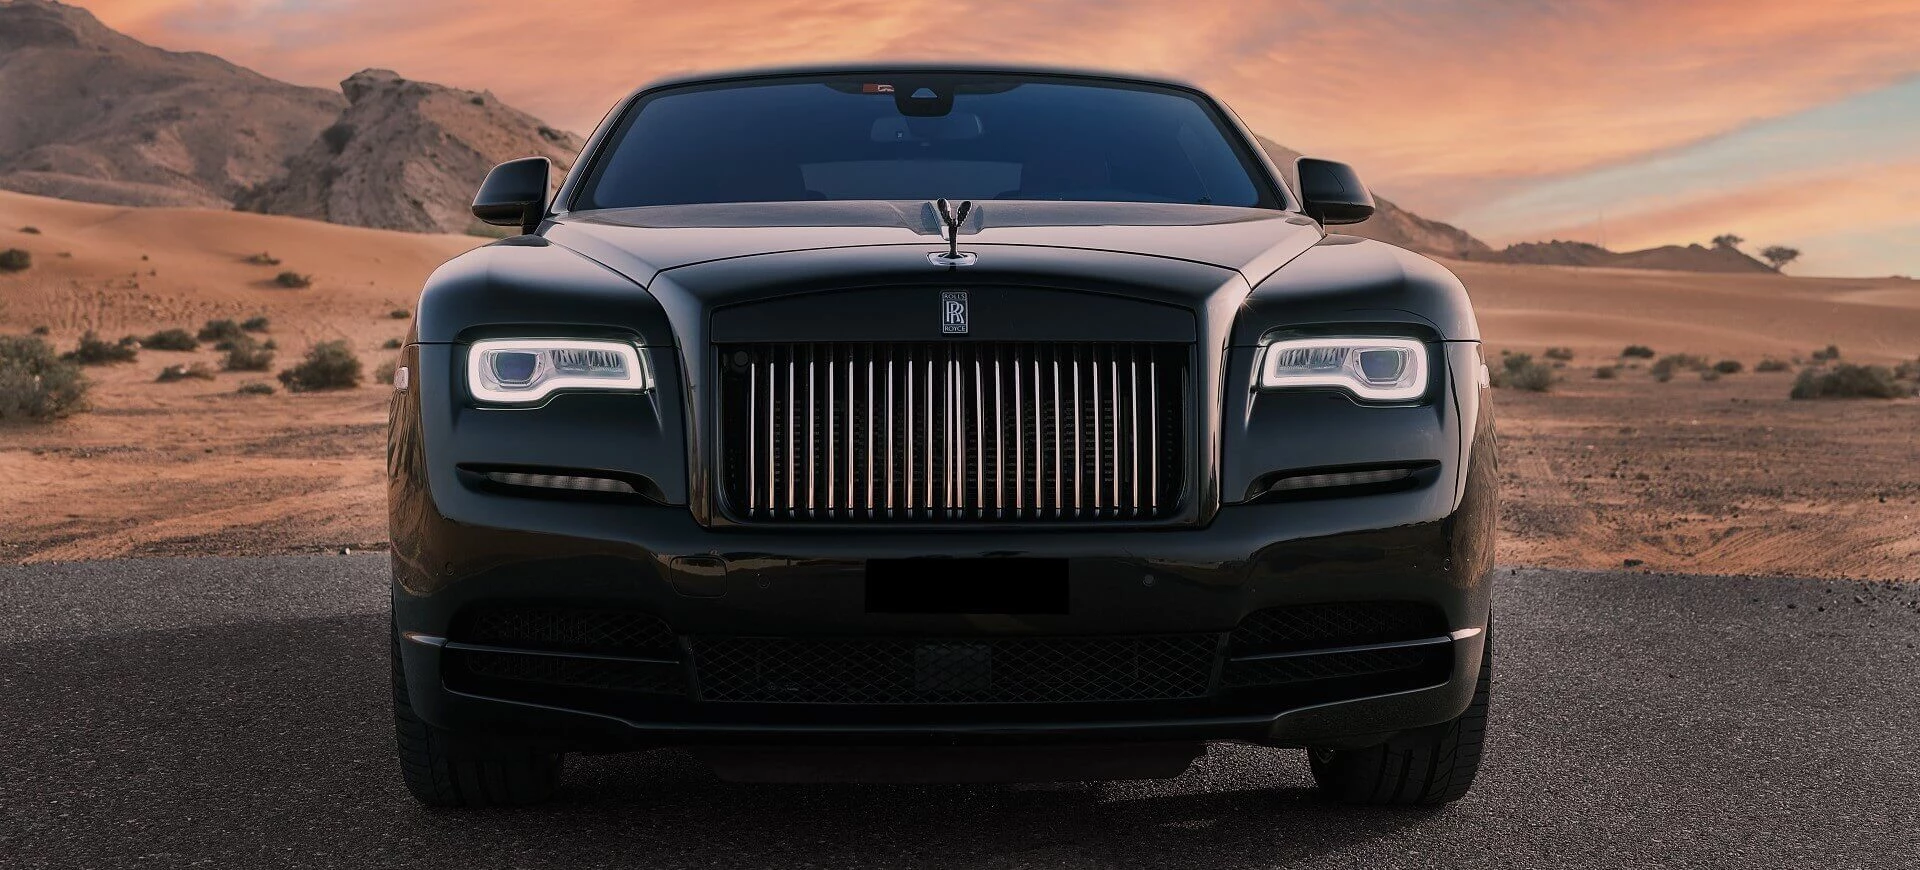 Alquilar Rolls Royce Wraith en Dubai